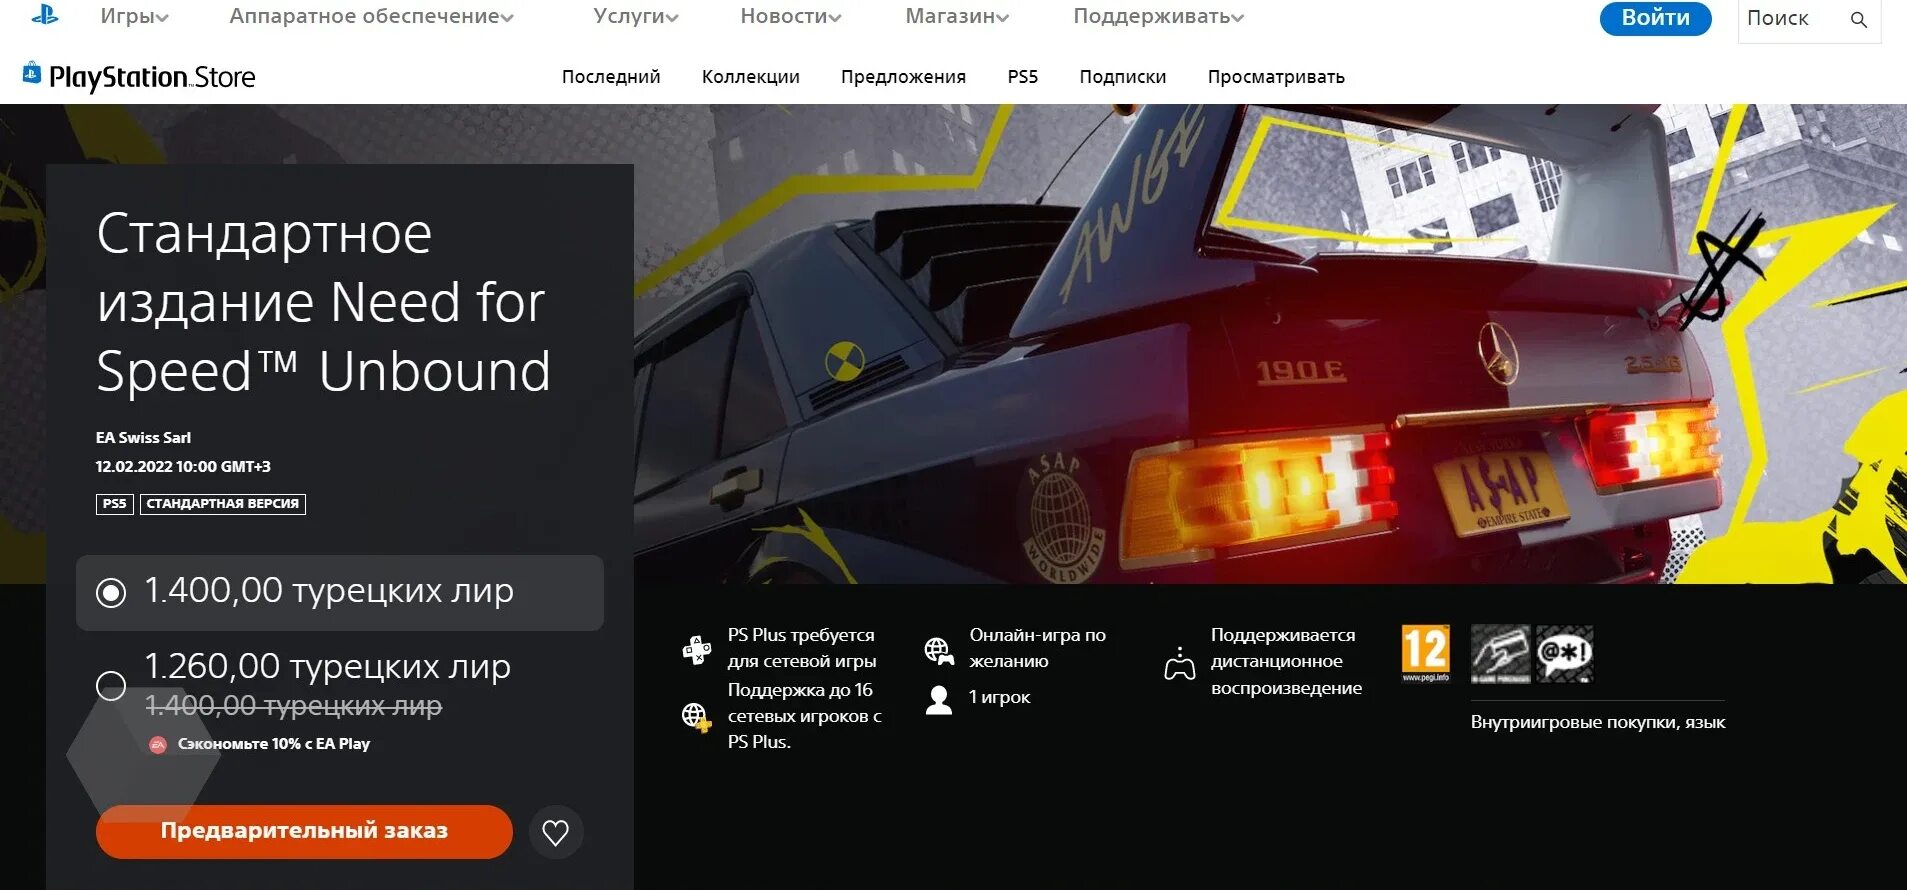 Need for Speed Unbound когда выйдет. 4200 долларов в рублях